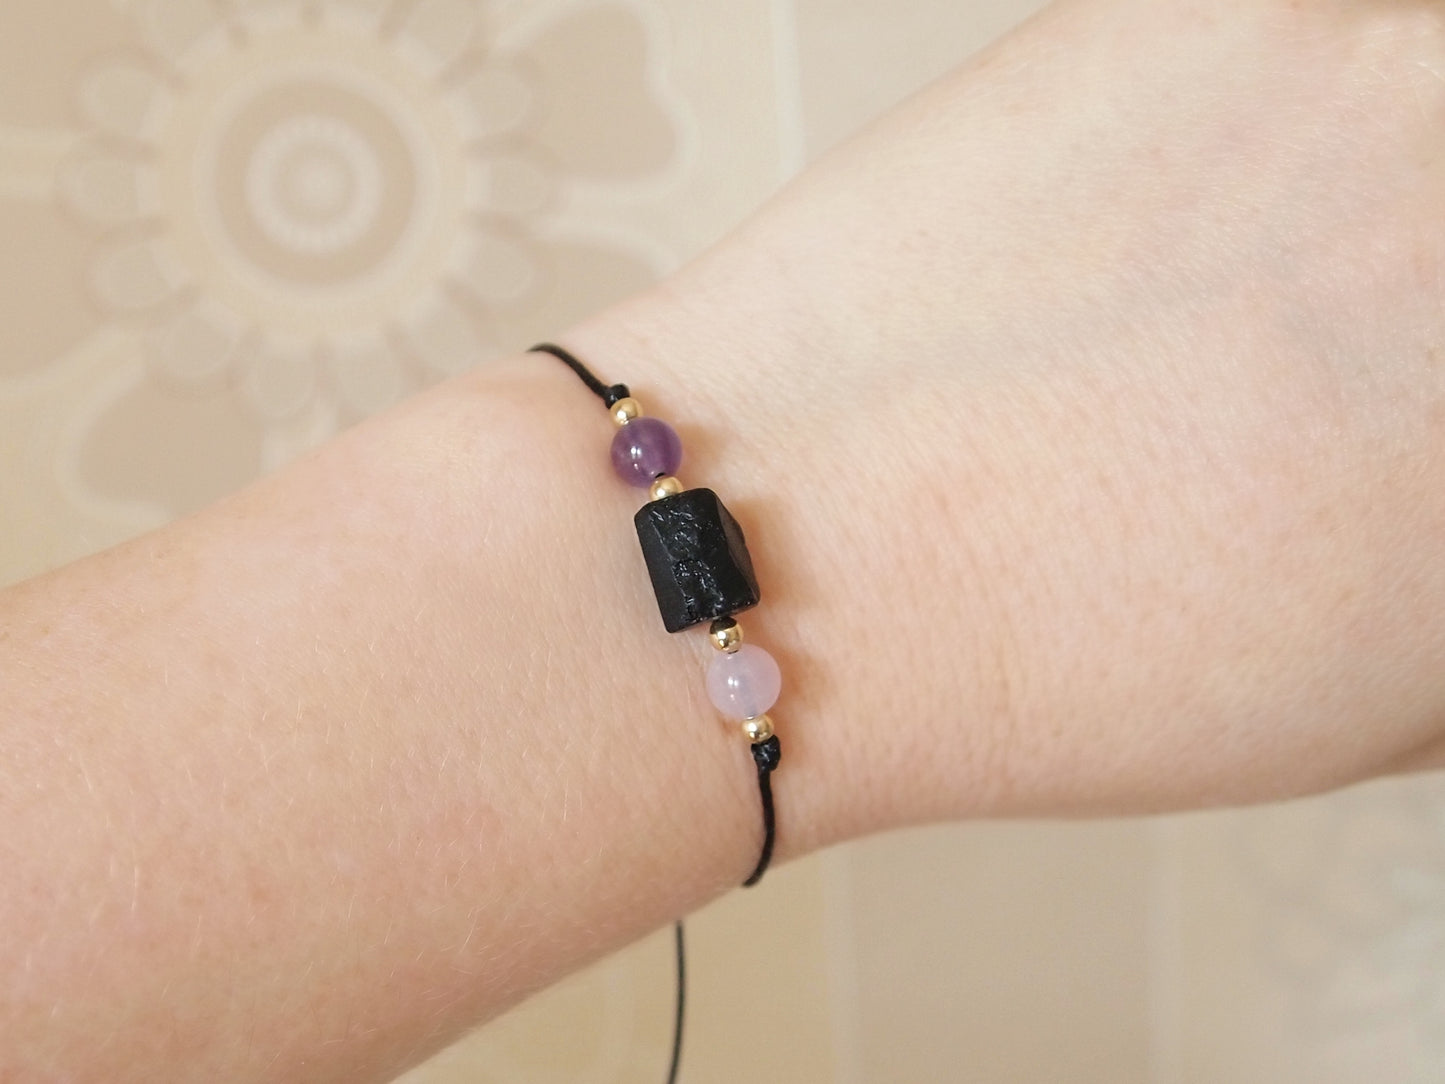 empath protection bracelet with brack tourmaline